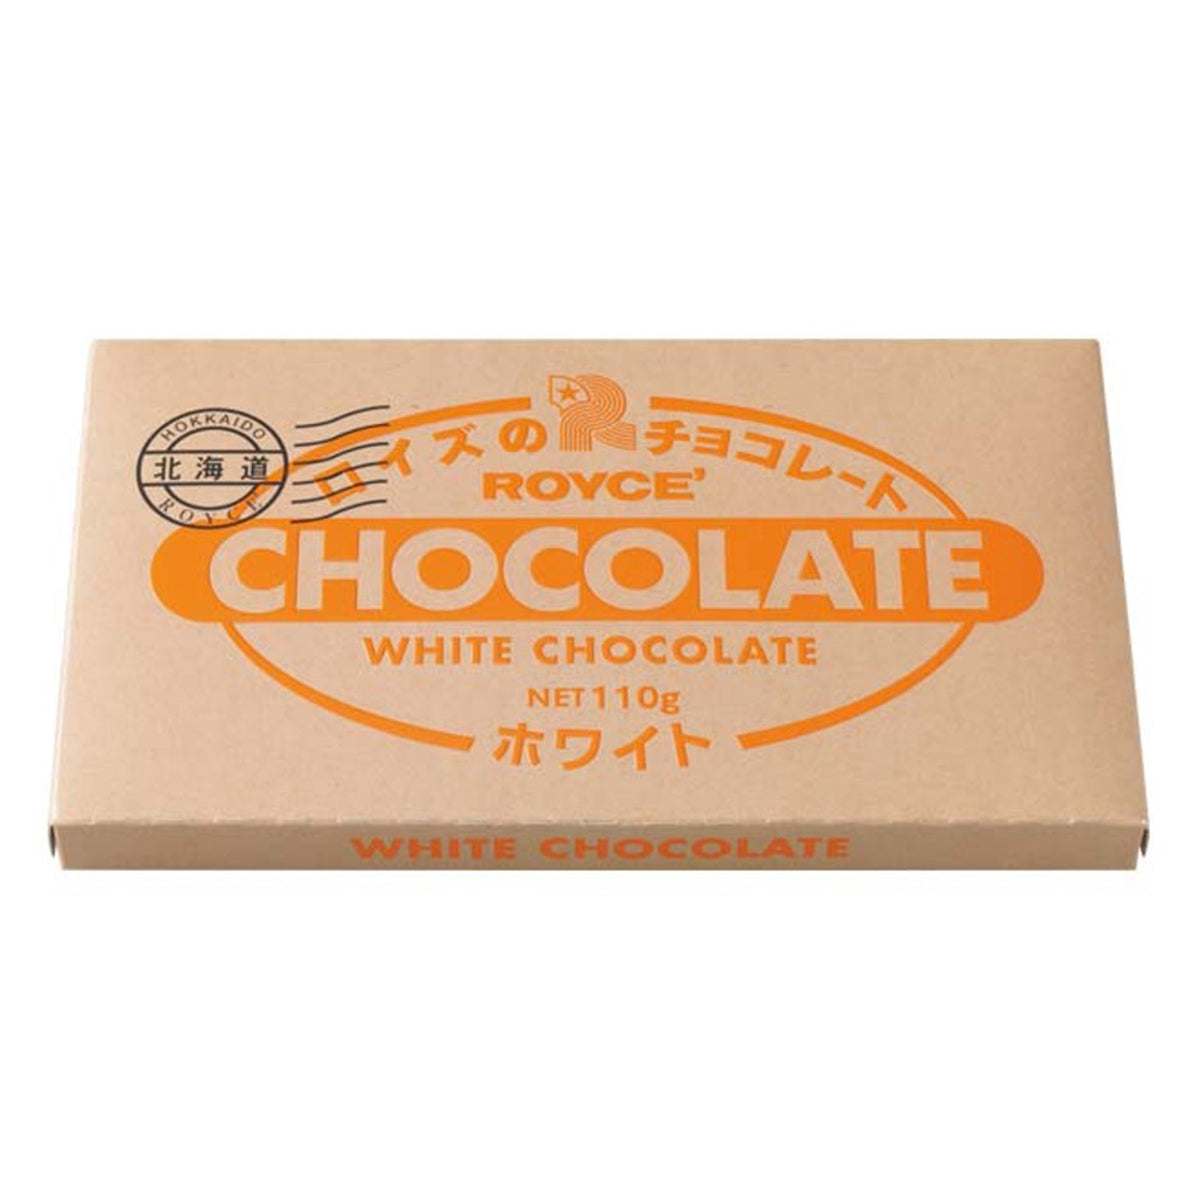 ROYCE' Chocolate - Chocolate Bar "White" - Image shows a chocolate carton. Text in black says Hokkaido ROYCE'. Text in orange says ROYCE' Chocolate White Chocolate Net 110g. Text on bottom part says White Chocolate.